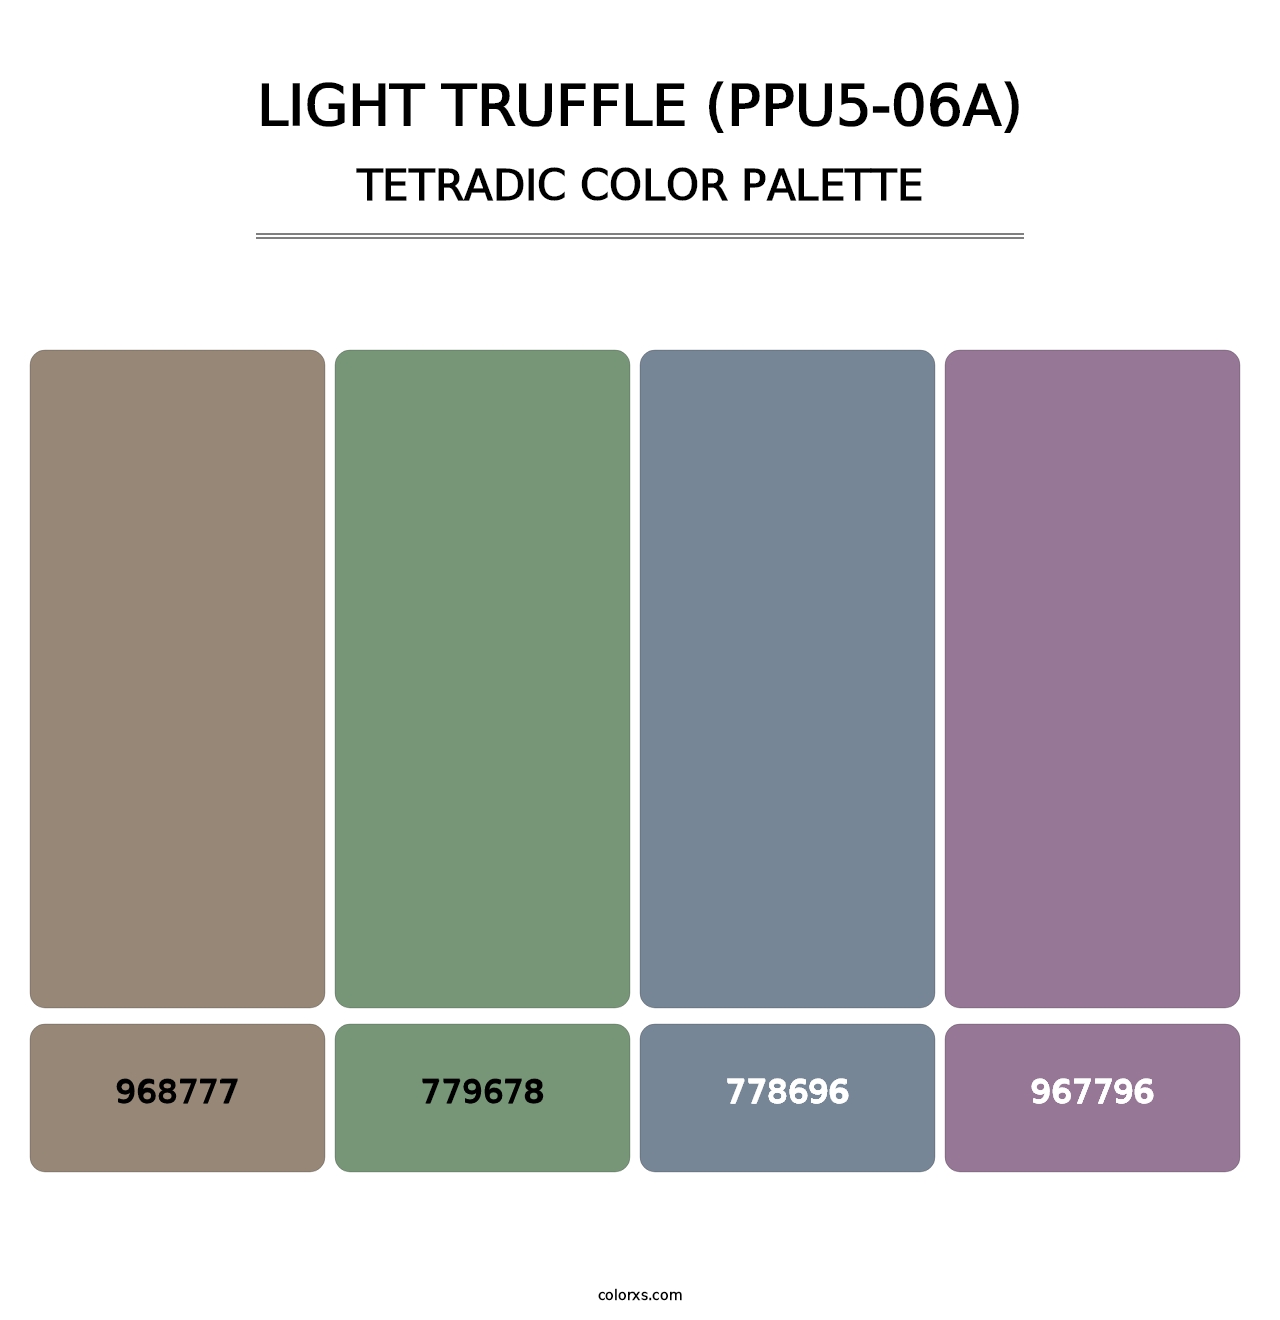 Light Truffle (PPU5-06A) - Tetradic Color Palette